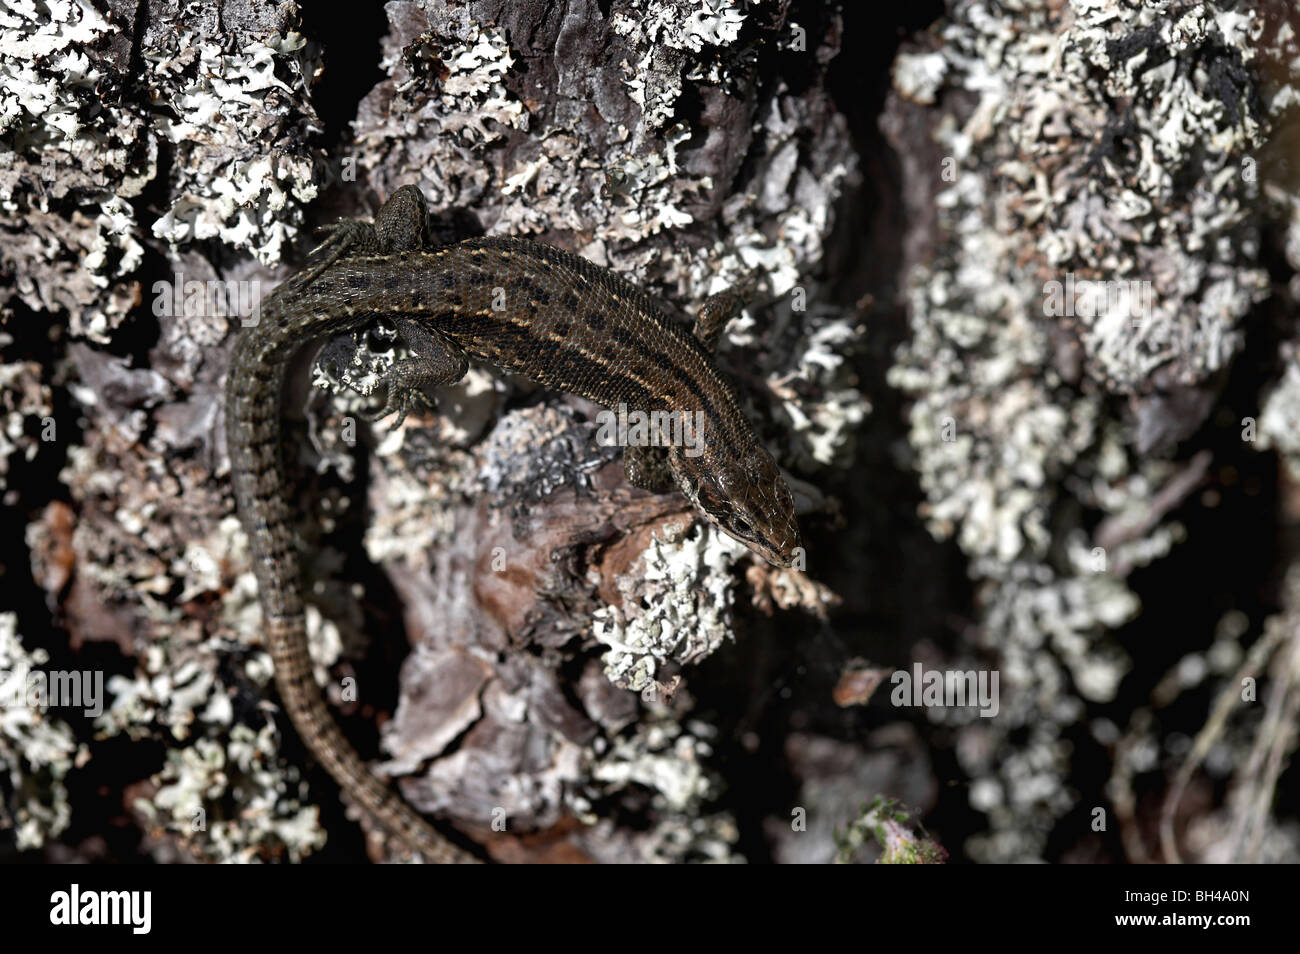 Common or viviparous lizard basking on rocks. Stock Photo